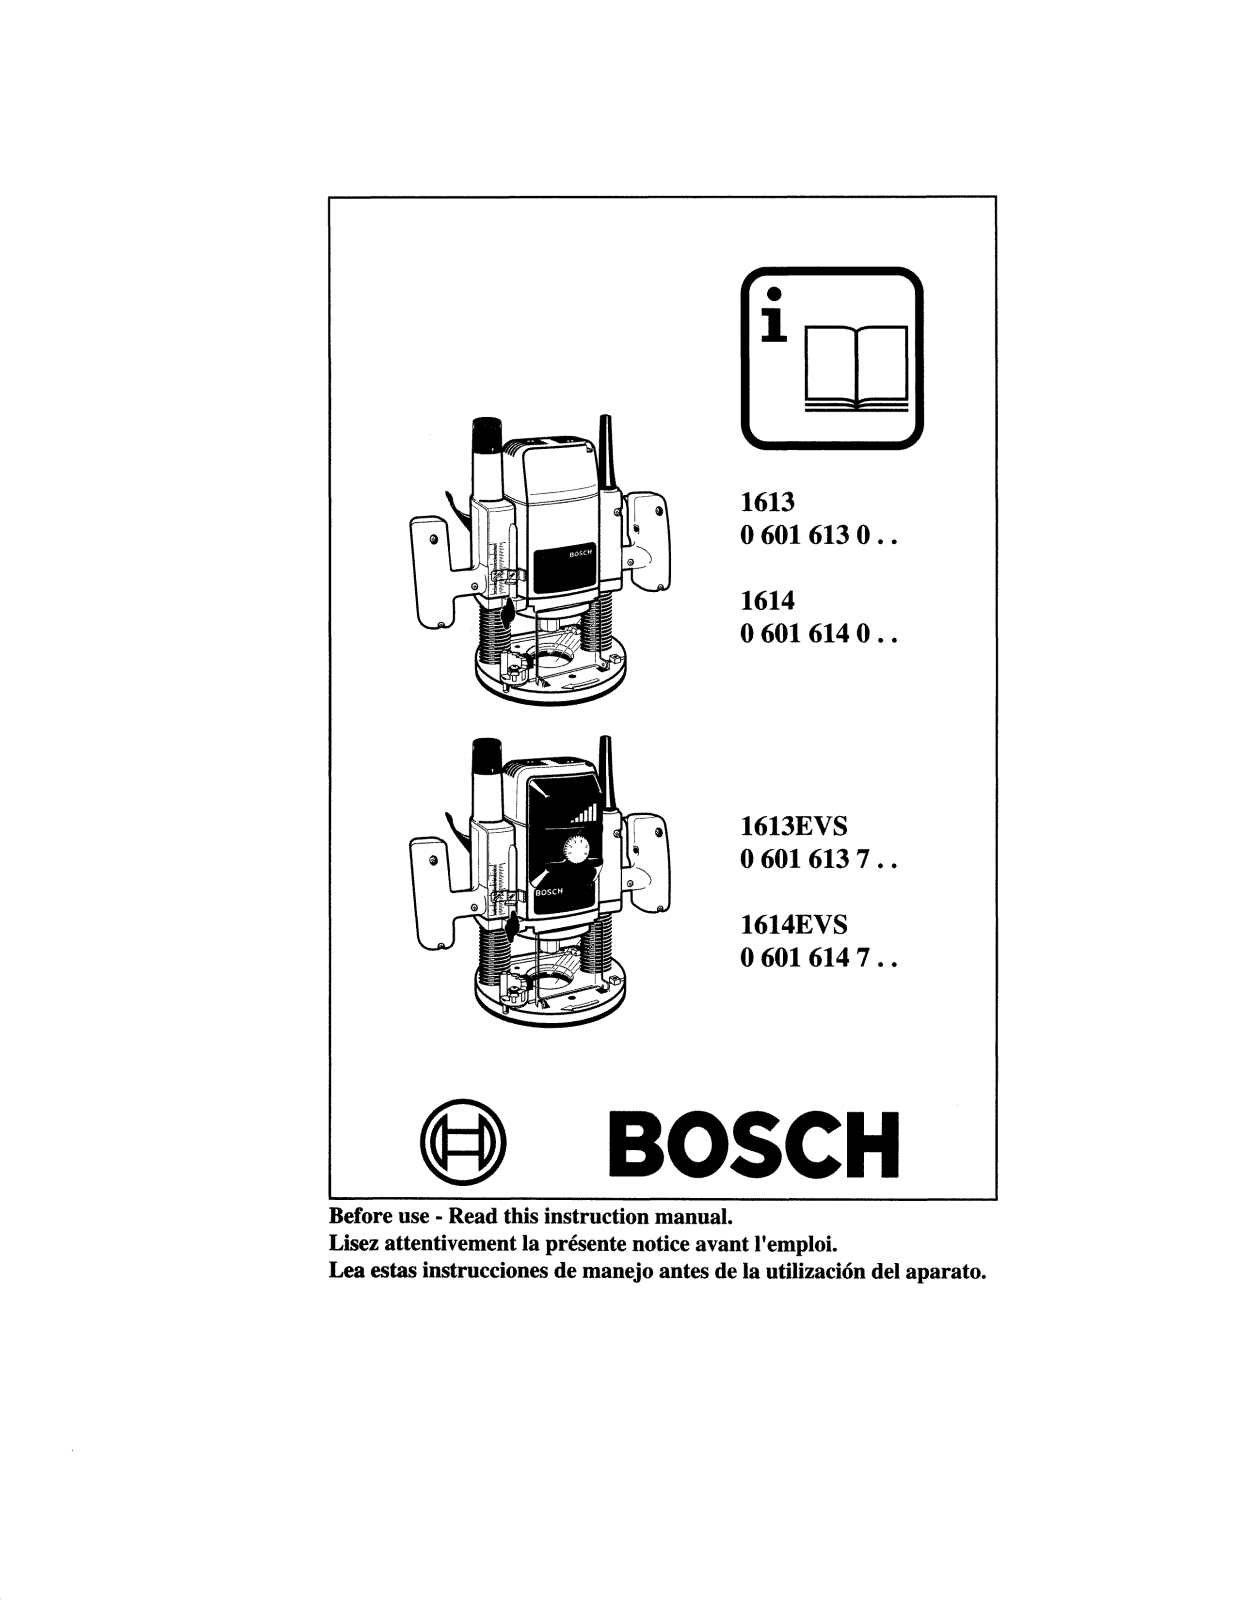 Bosch 1613EVS Owner’s Manual